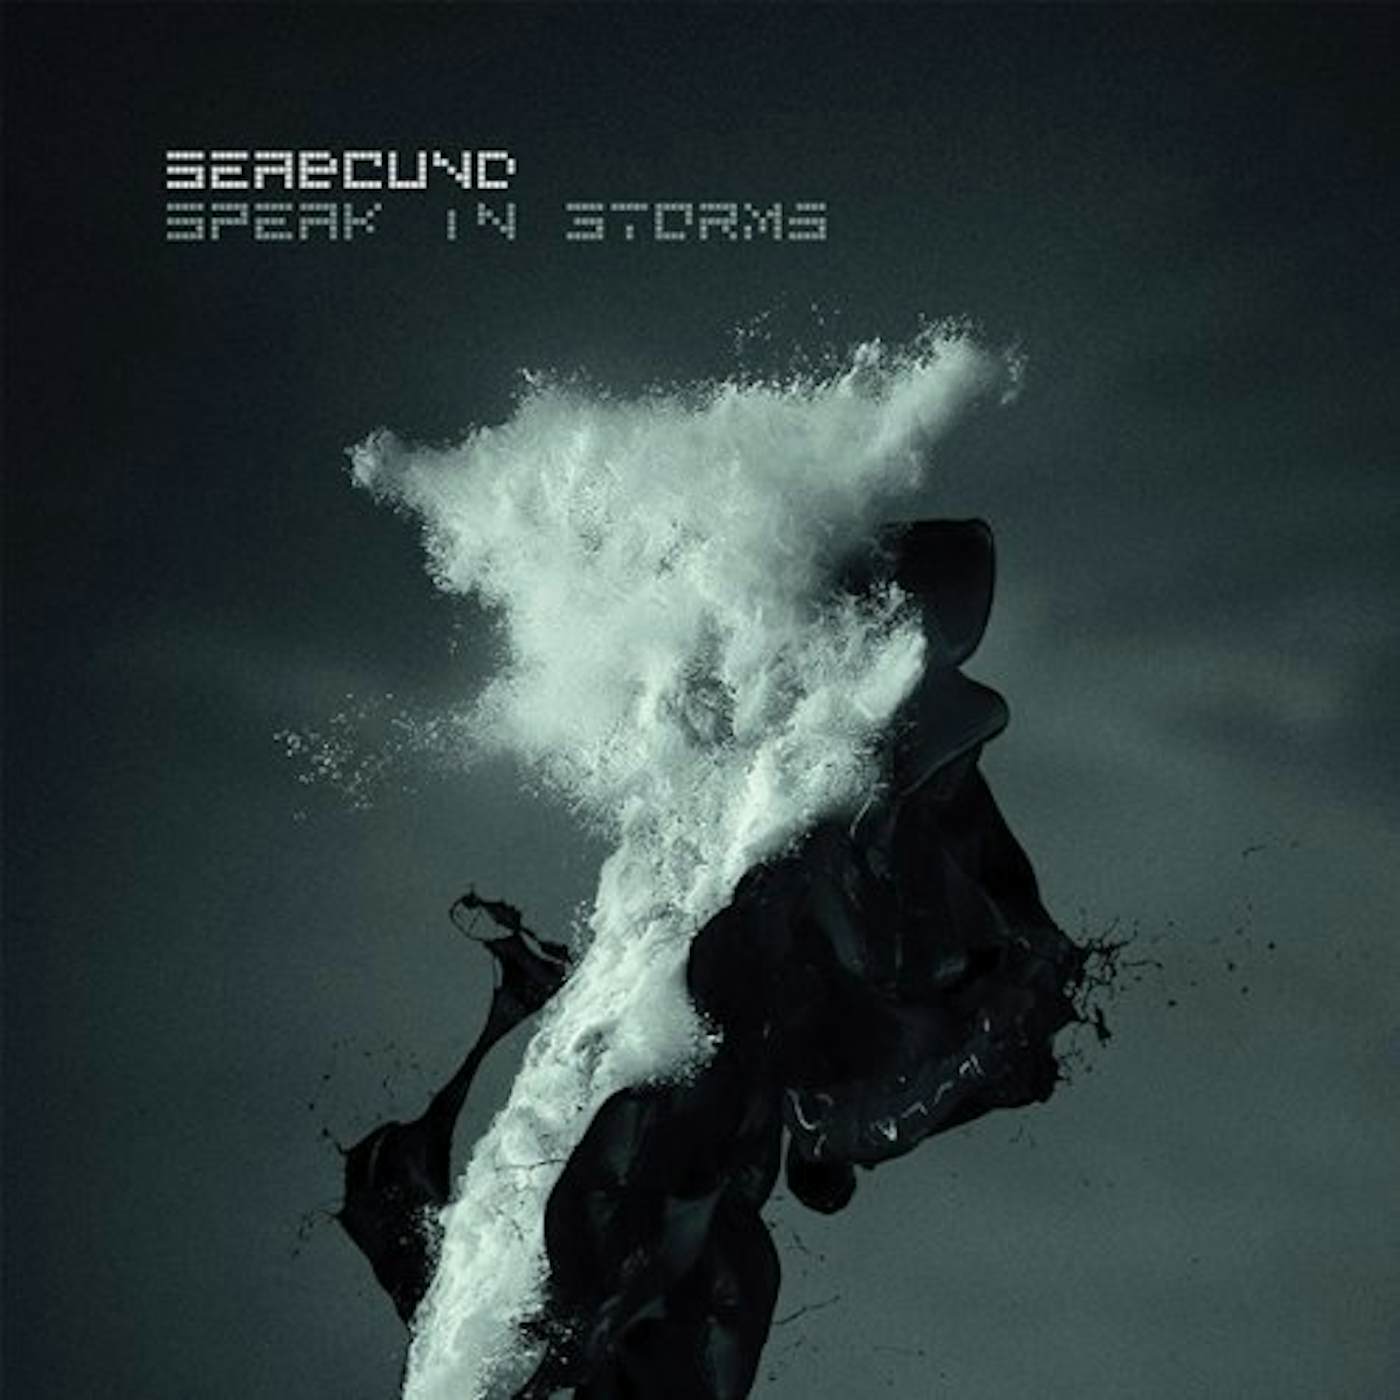 Seabound SPEAK IN STORMS CD